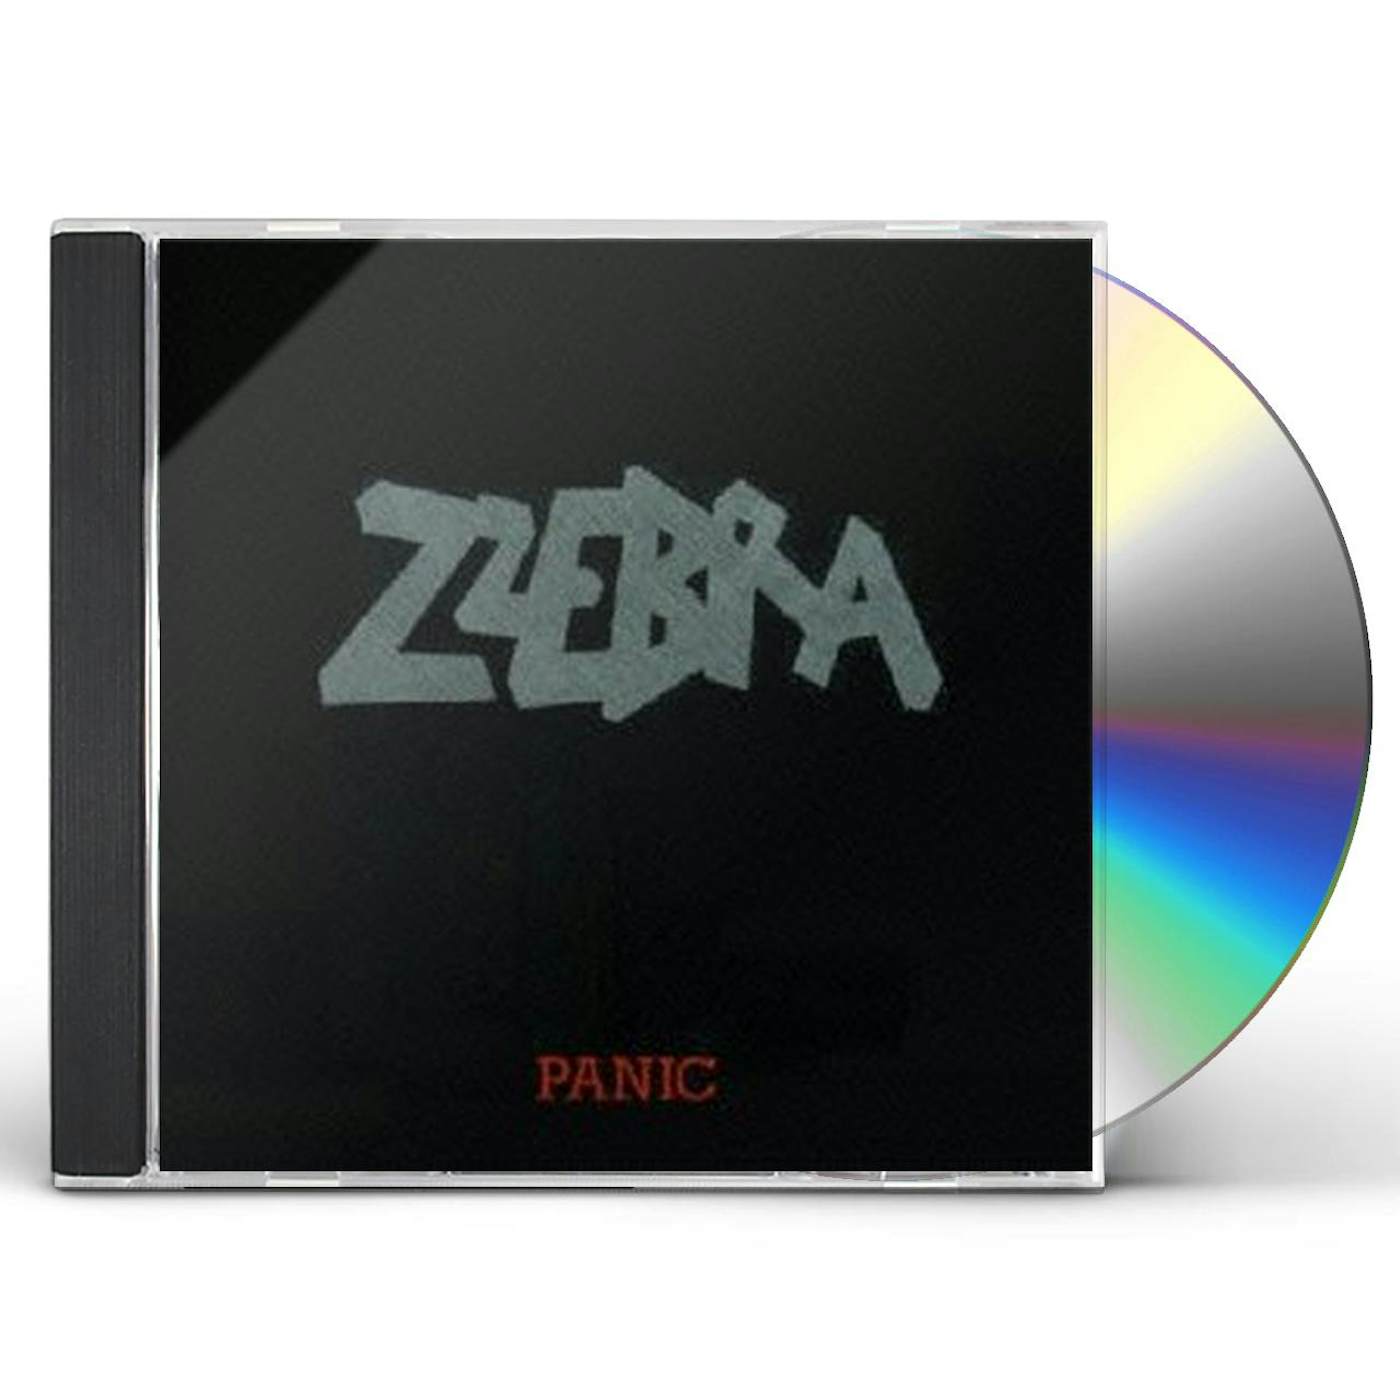 Zzebra PANIC CD